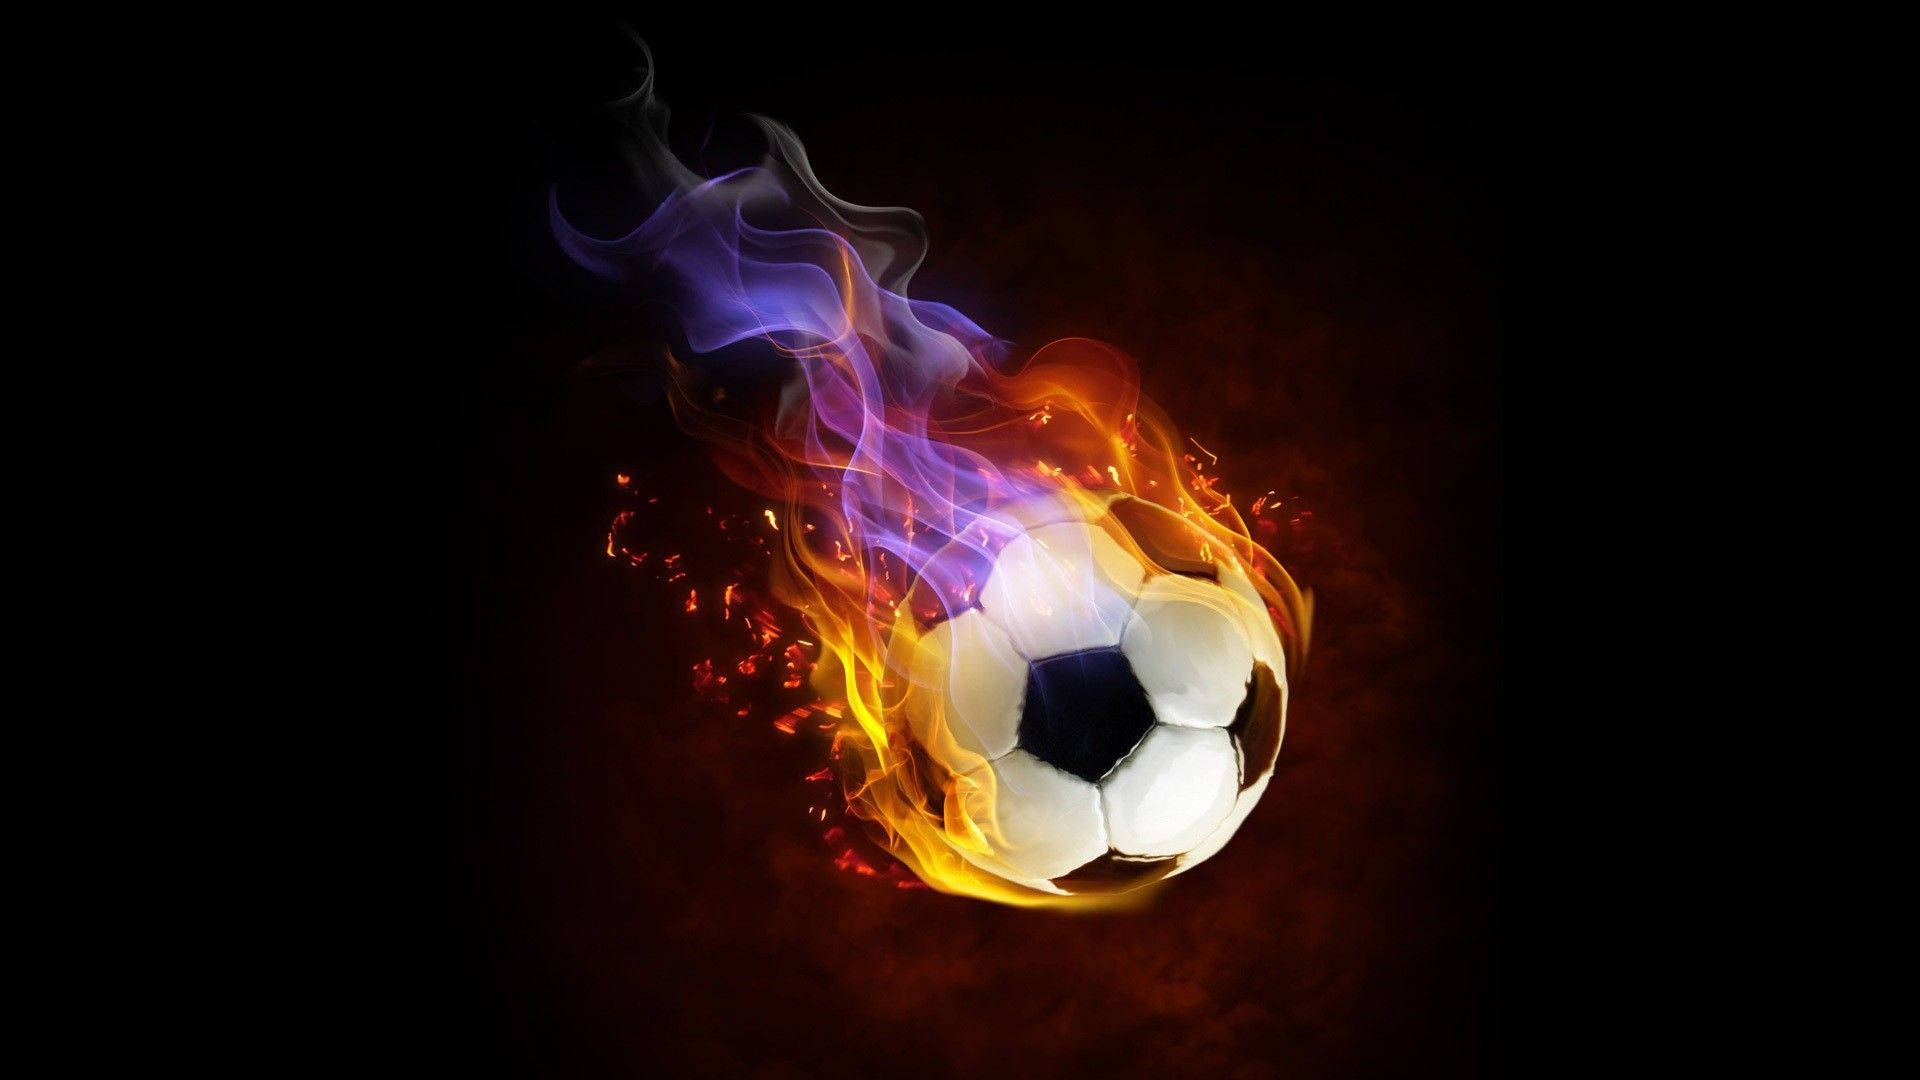 Cool Soccer Ball Flames